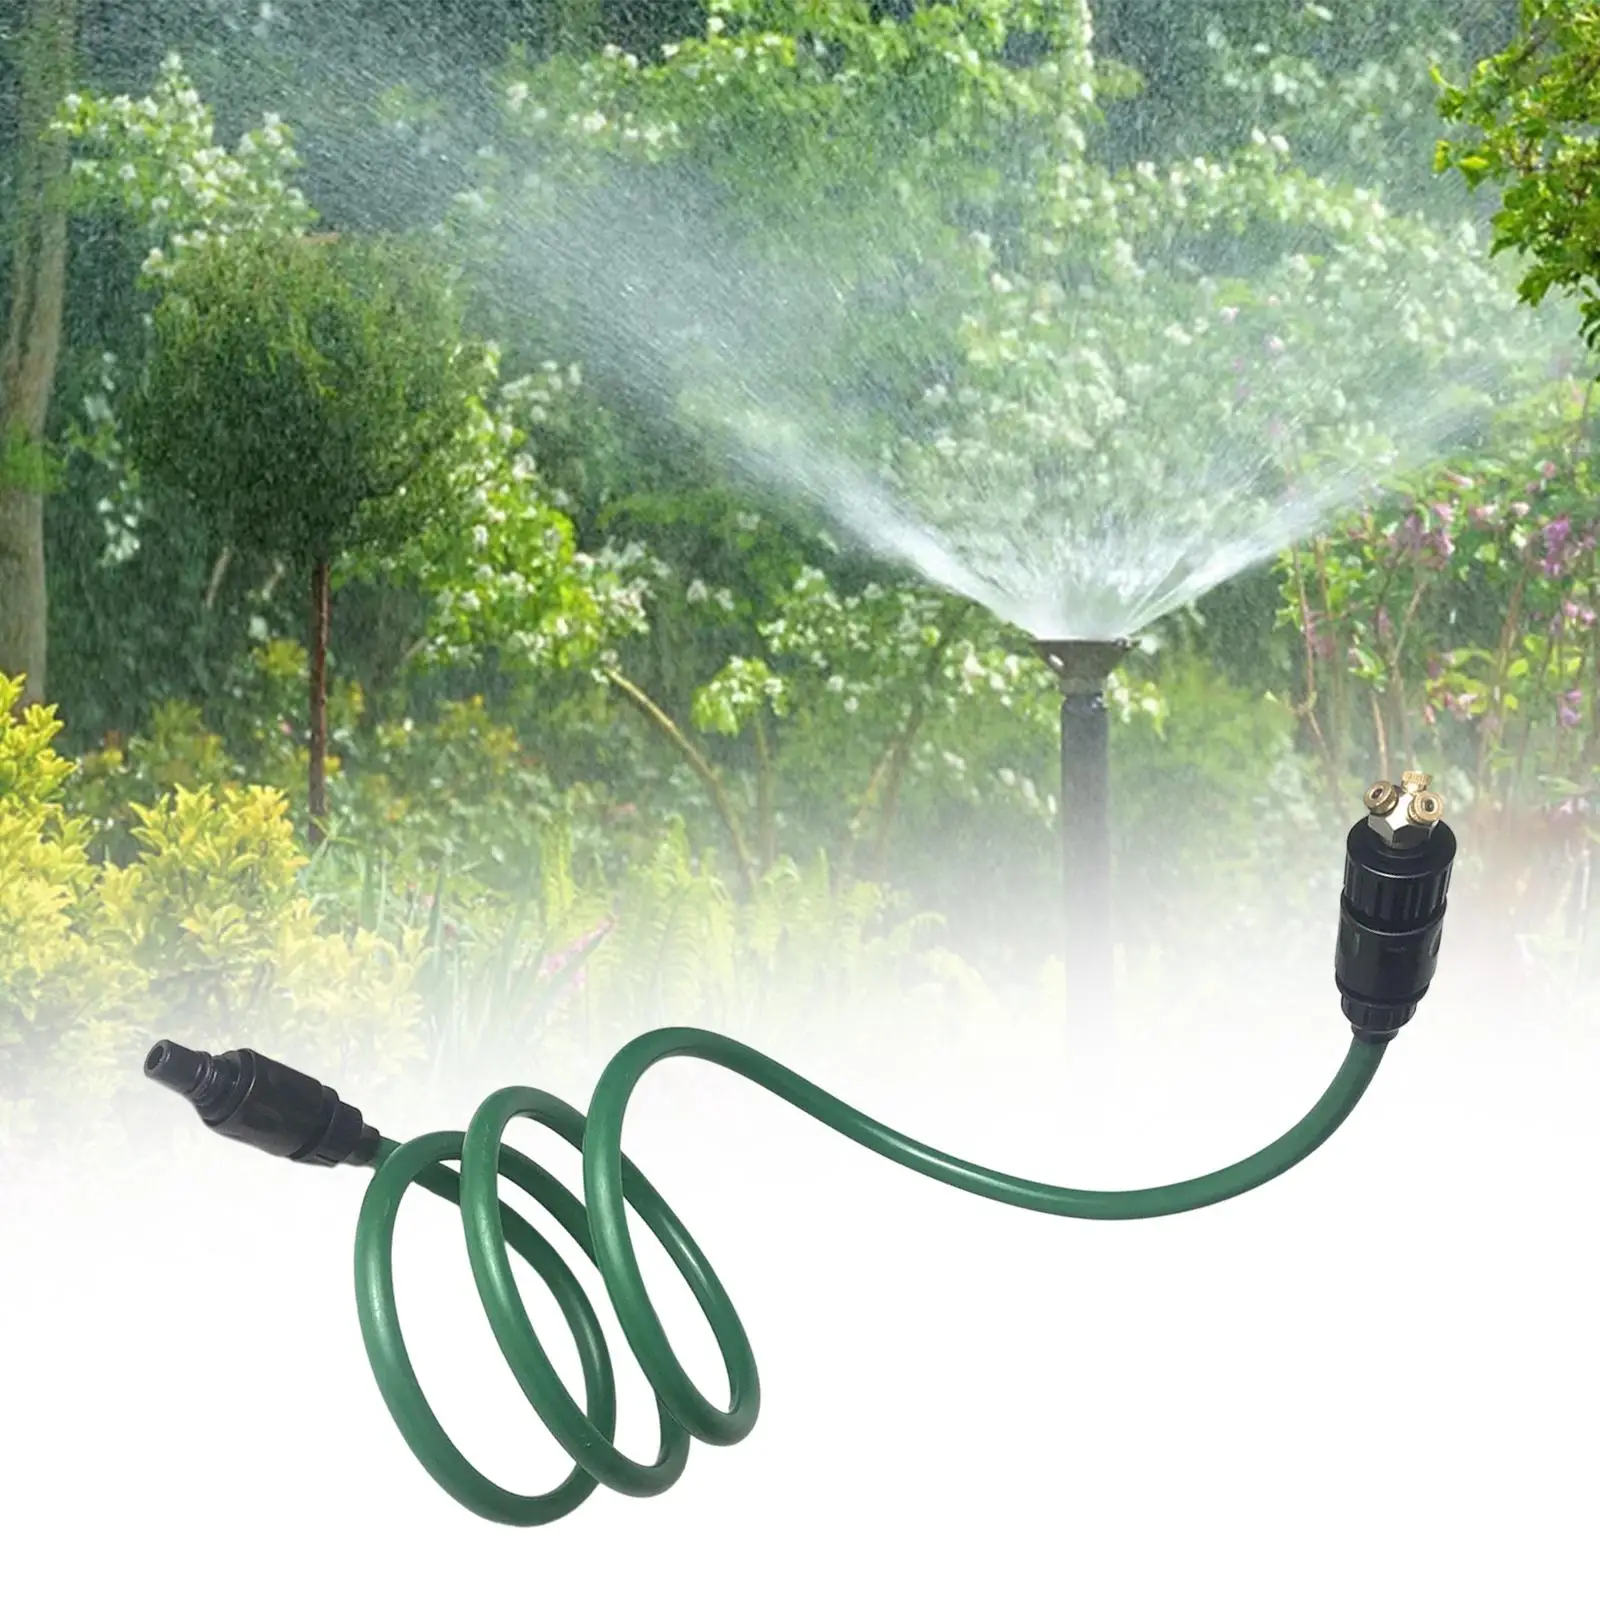 Flexible Mist Stand Mist Hose Attachment Outdoor Hose Mister Cooling Spray Sprinkler for Lawn Backyard Sunbath Garden, Bird Bath